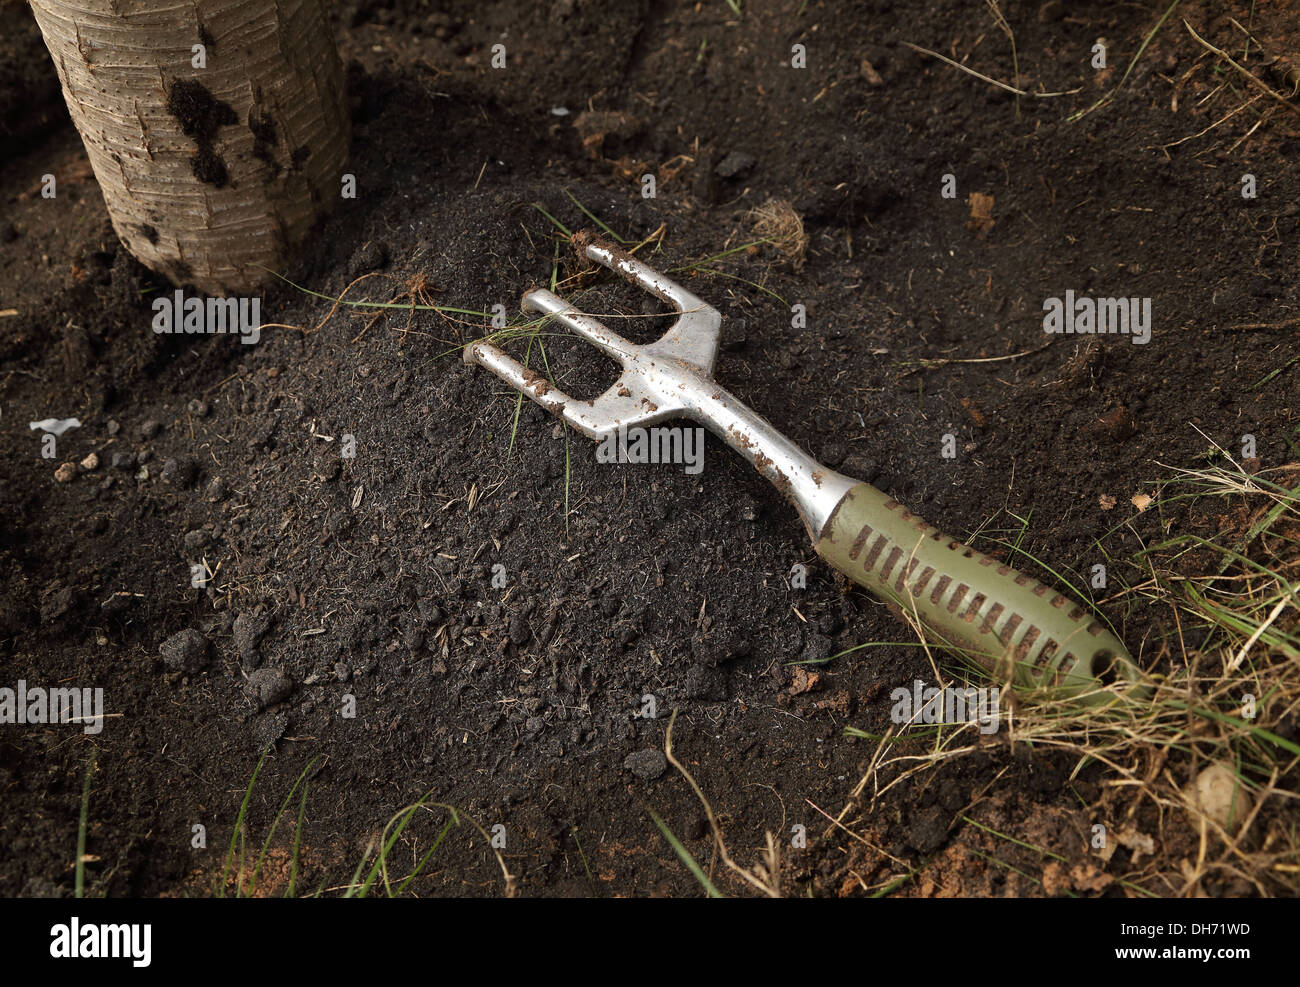 small gardening fork on the soil Stock Photo